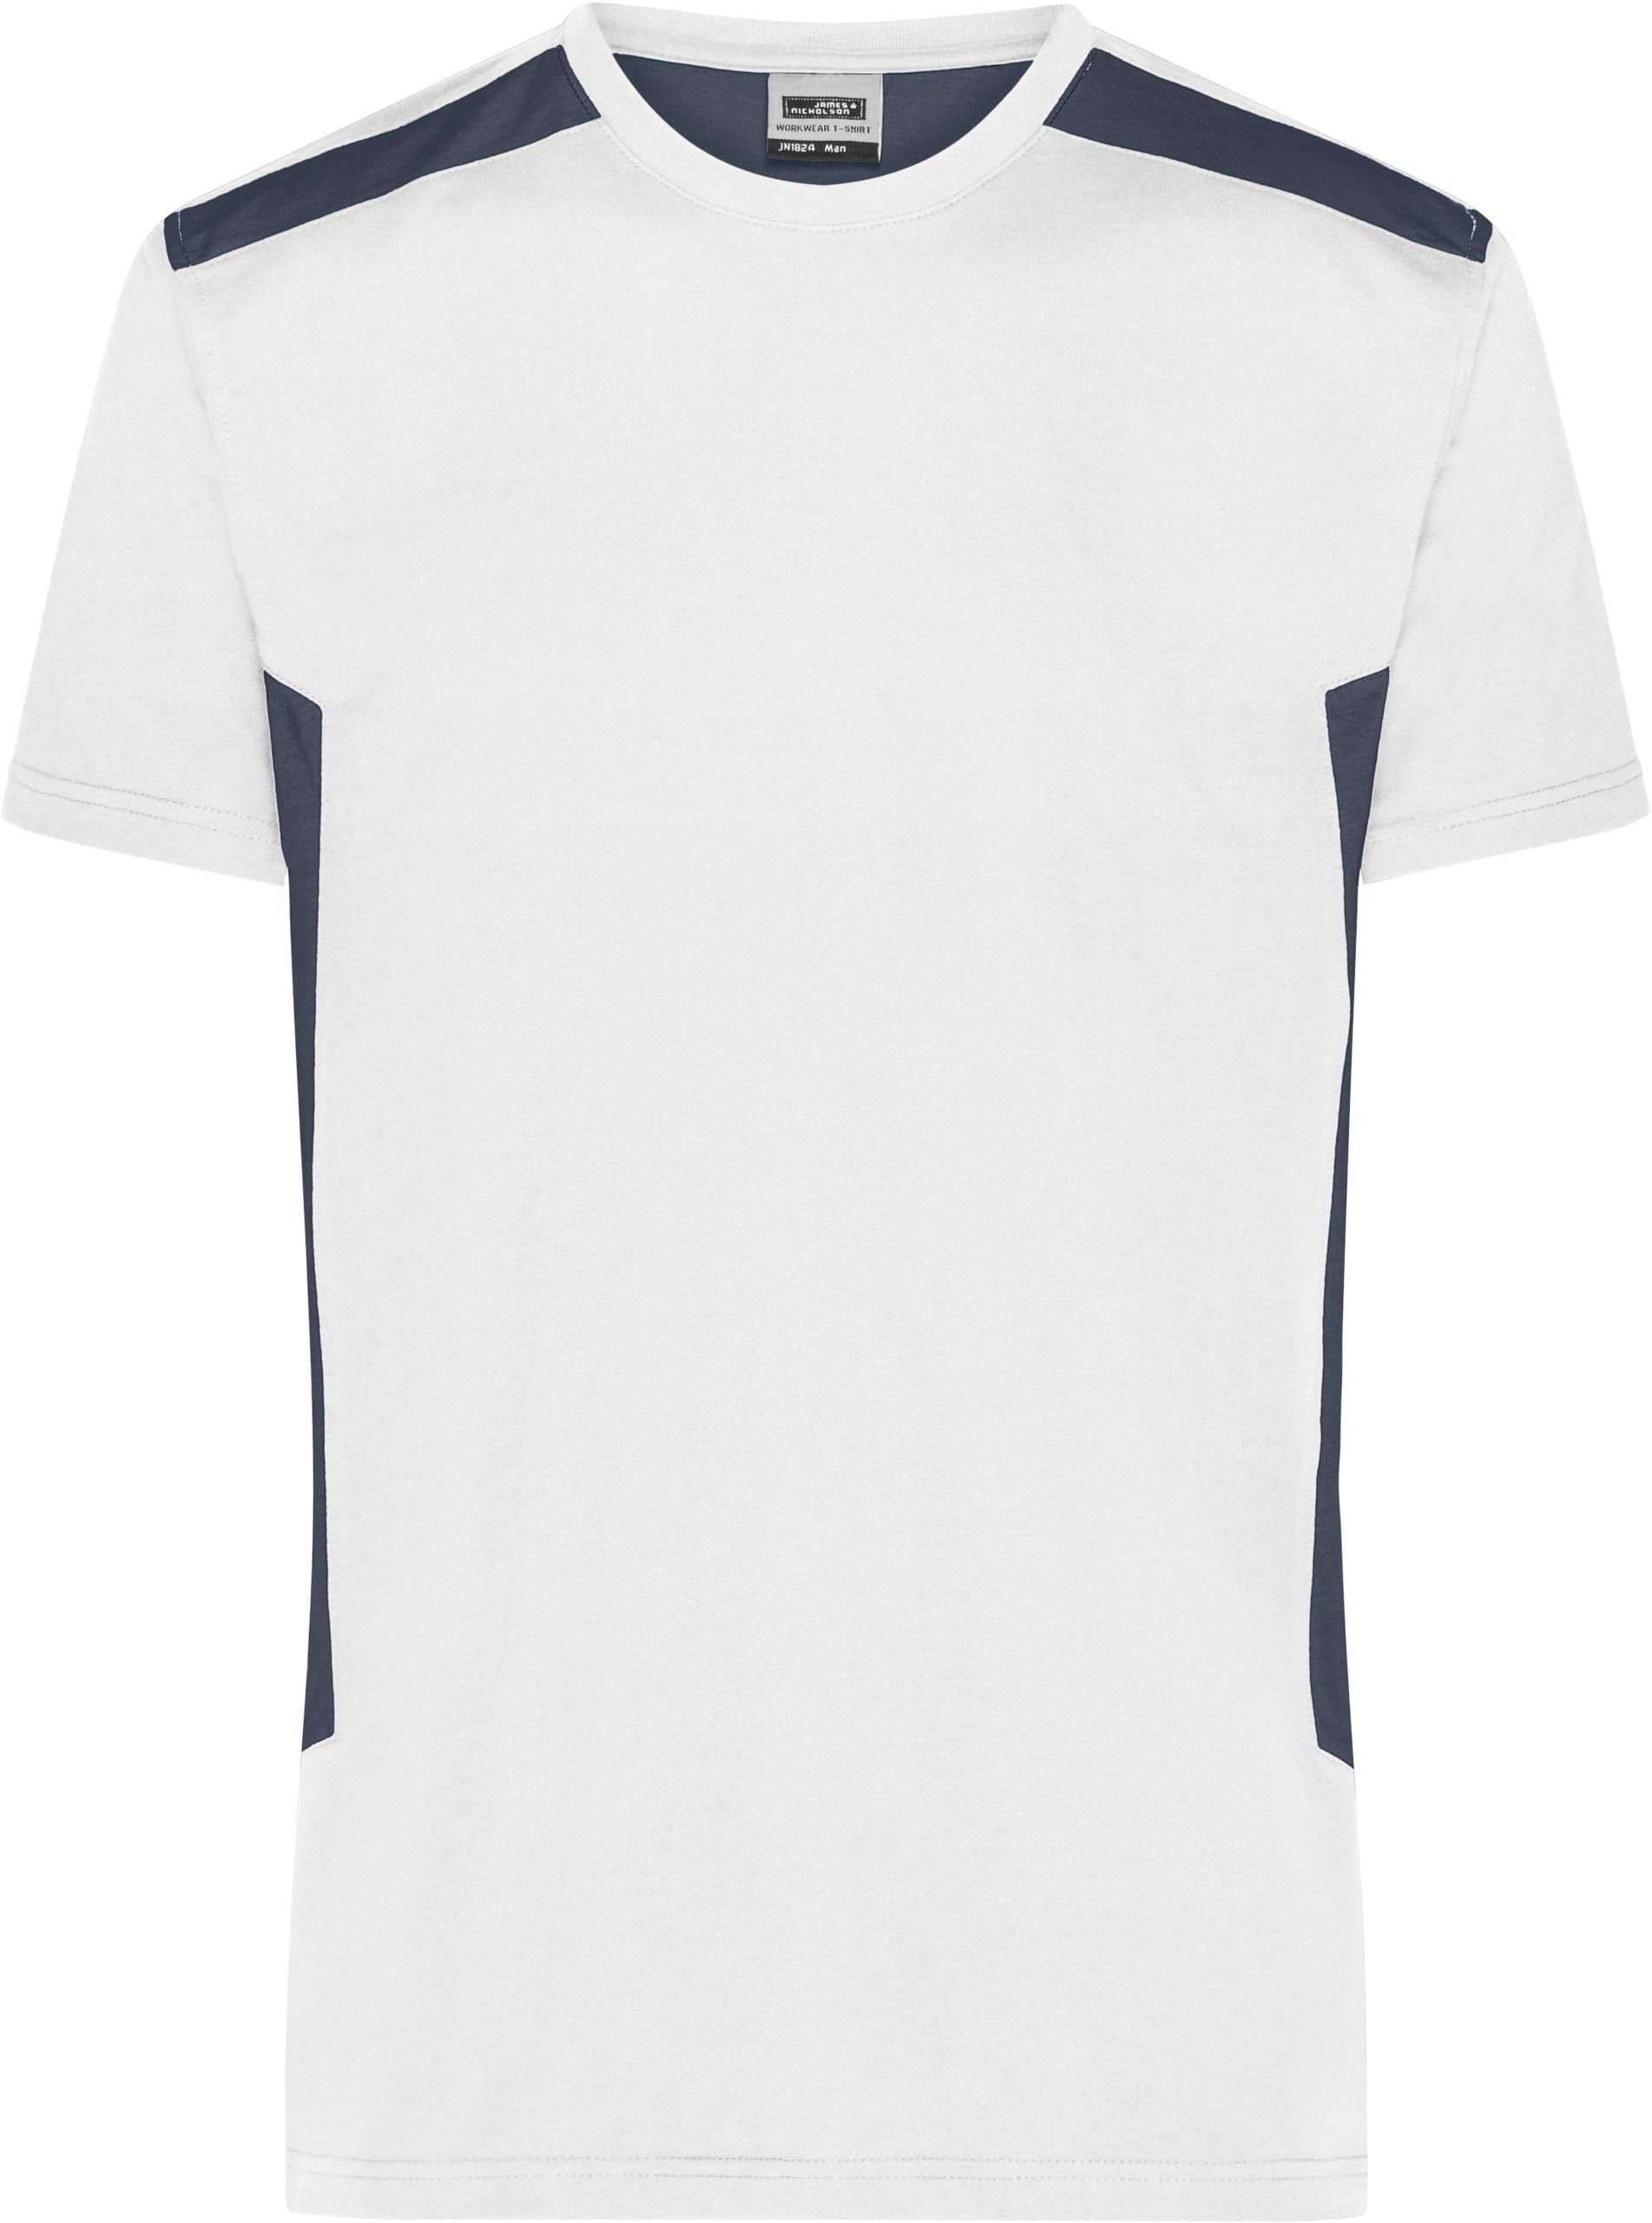 James & Nicholson T-Shirt Herren Workwear T-Shirt - Strong white/carbon